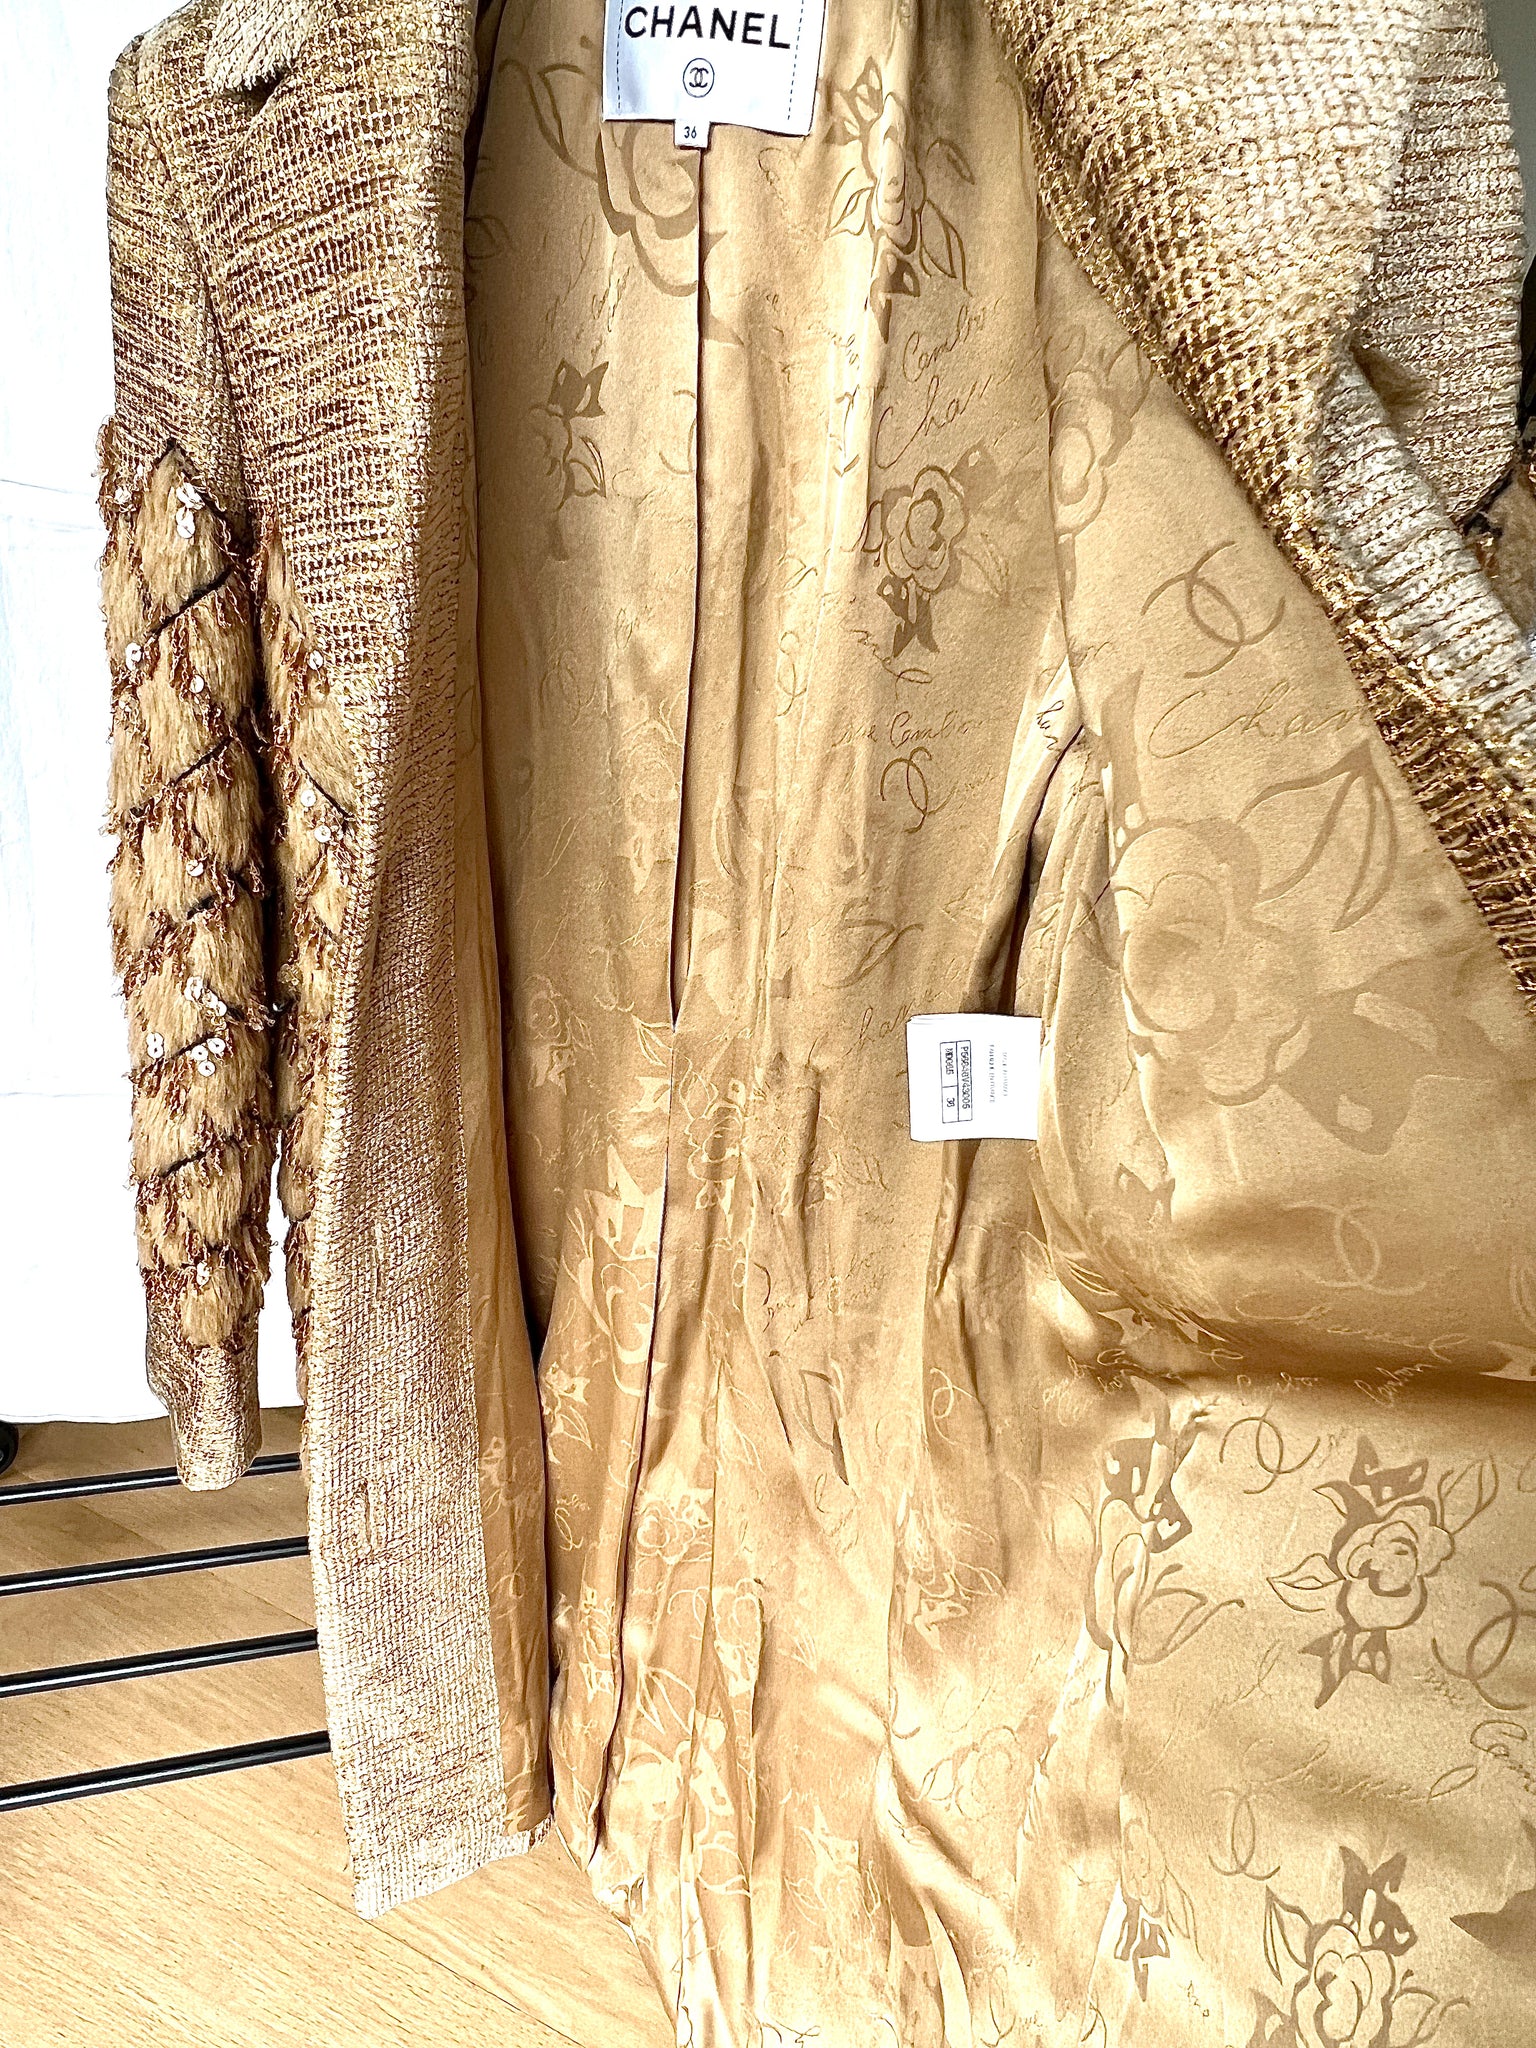 Chanel Unique Gold Jacket in Size 36 - Lou's Closet